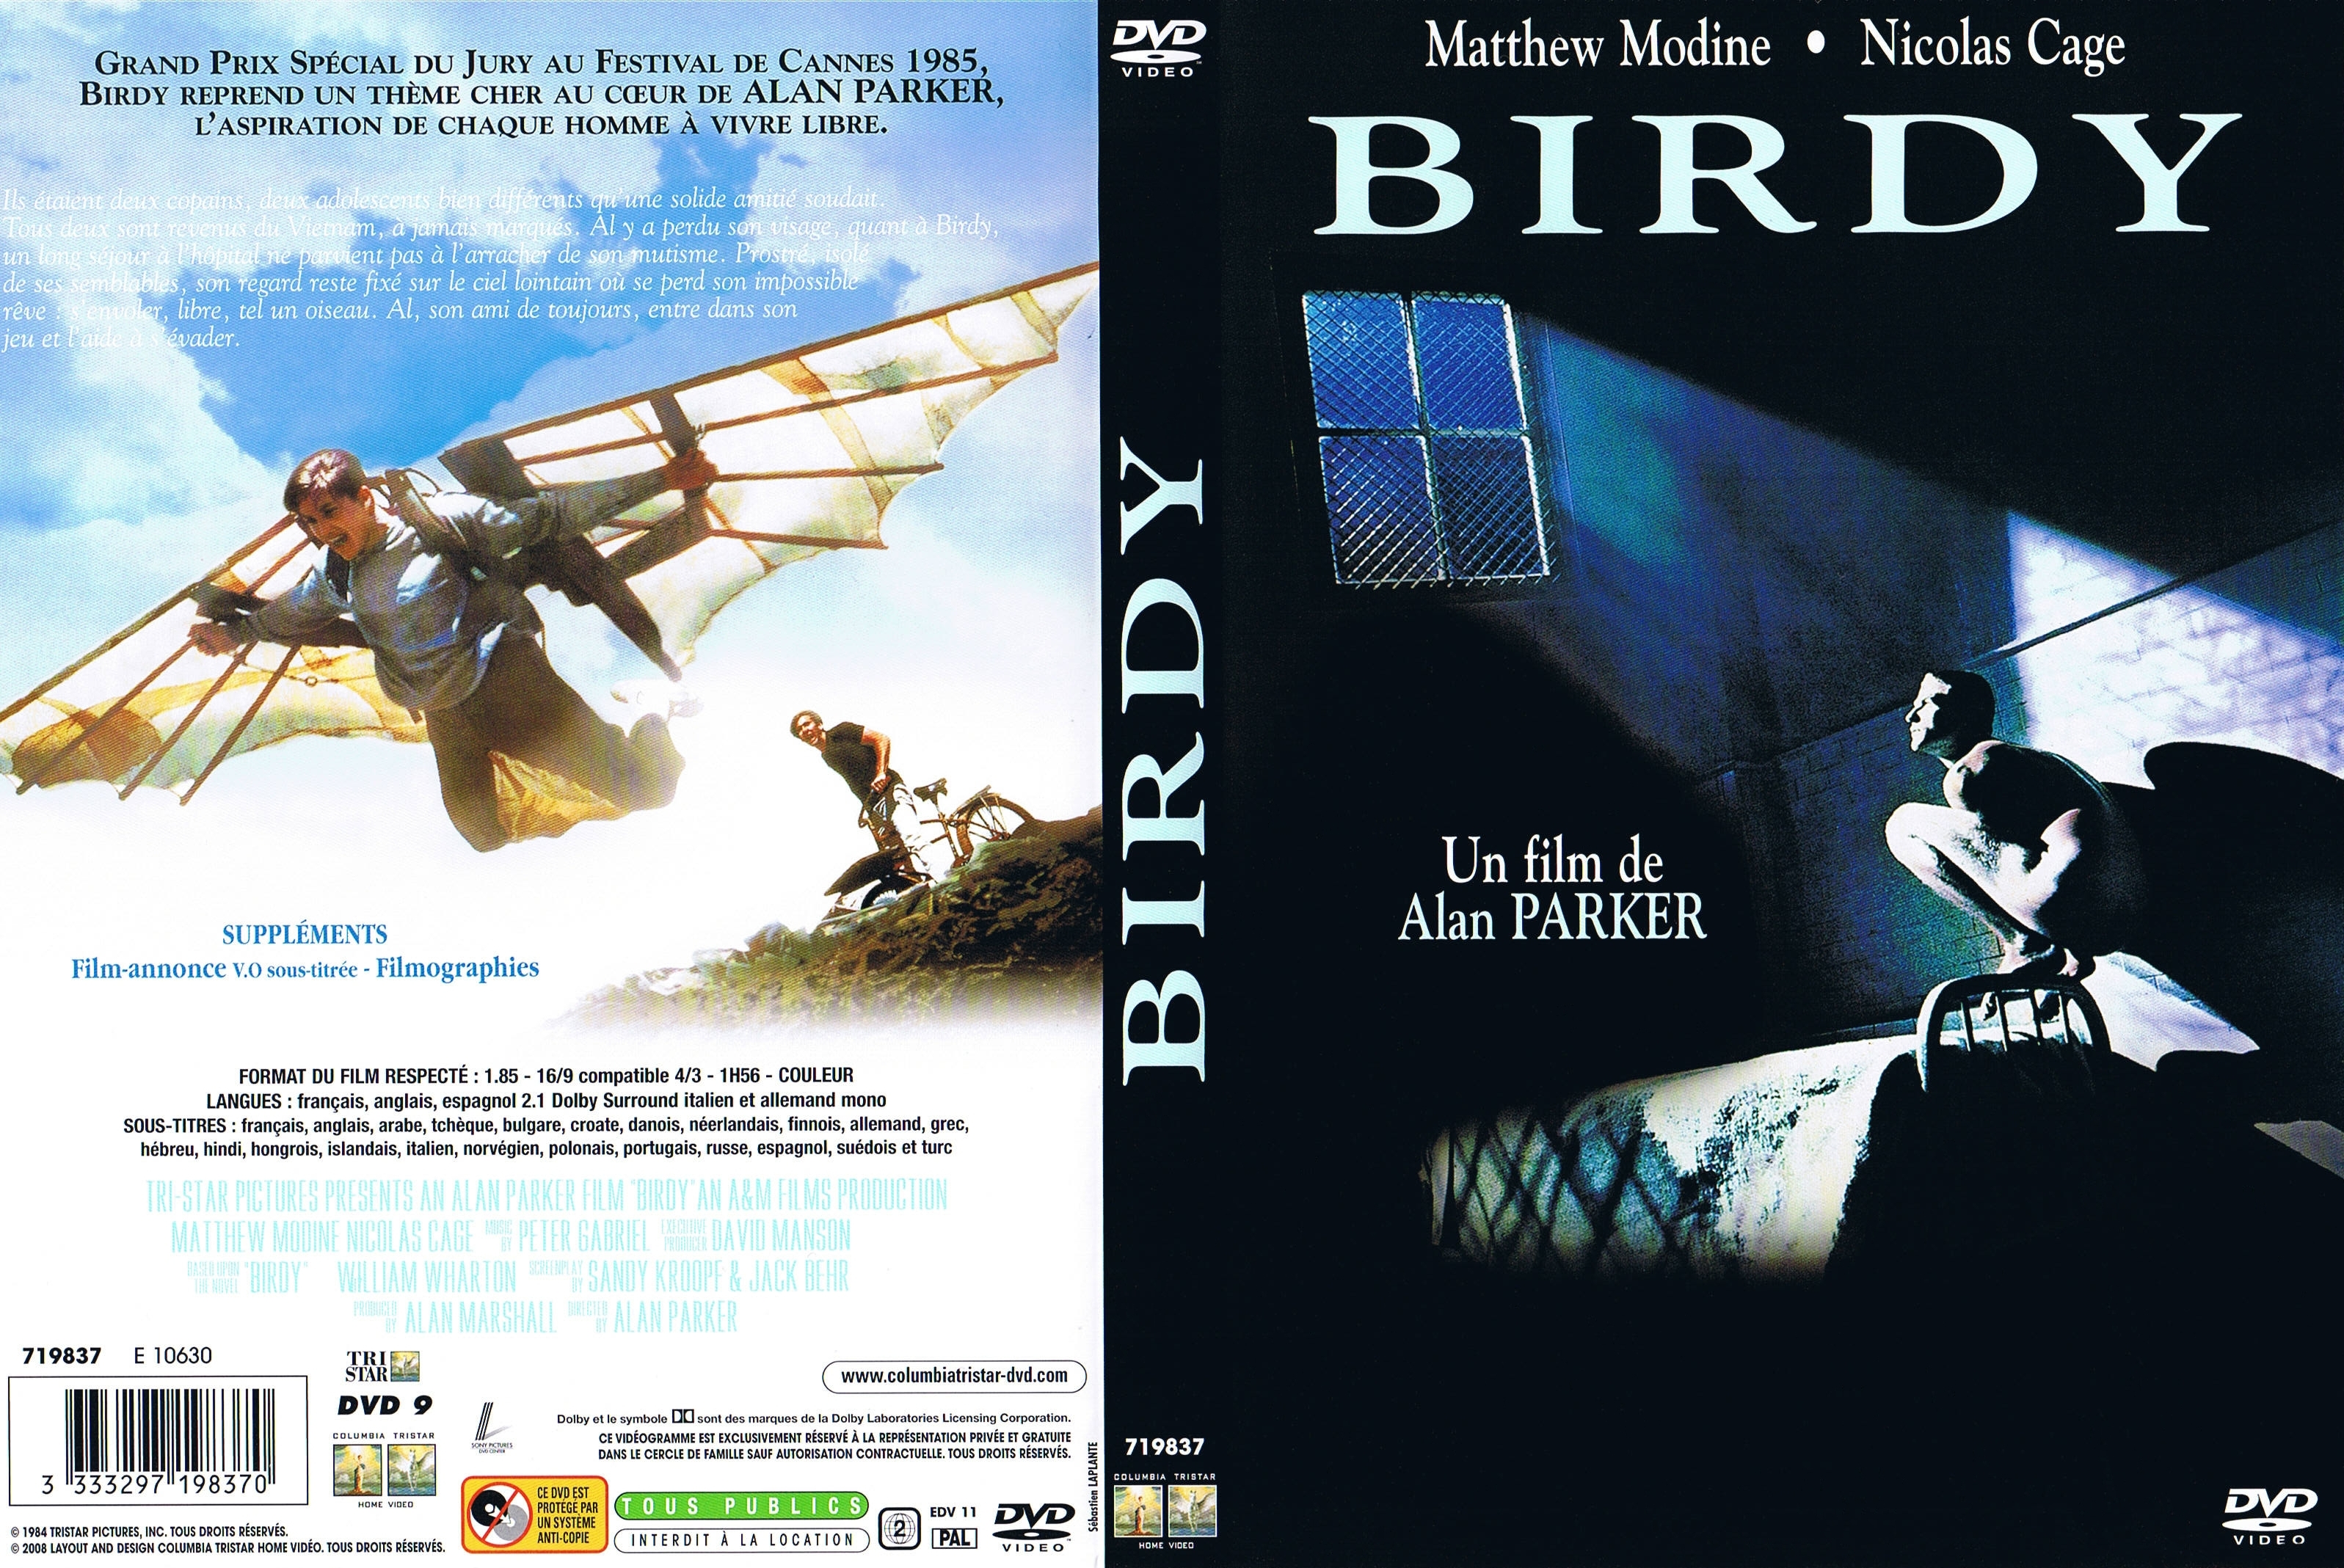 Jaquette DVD Birdy v3